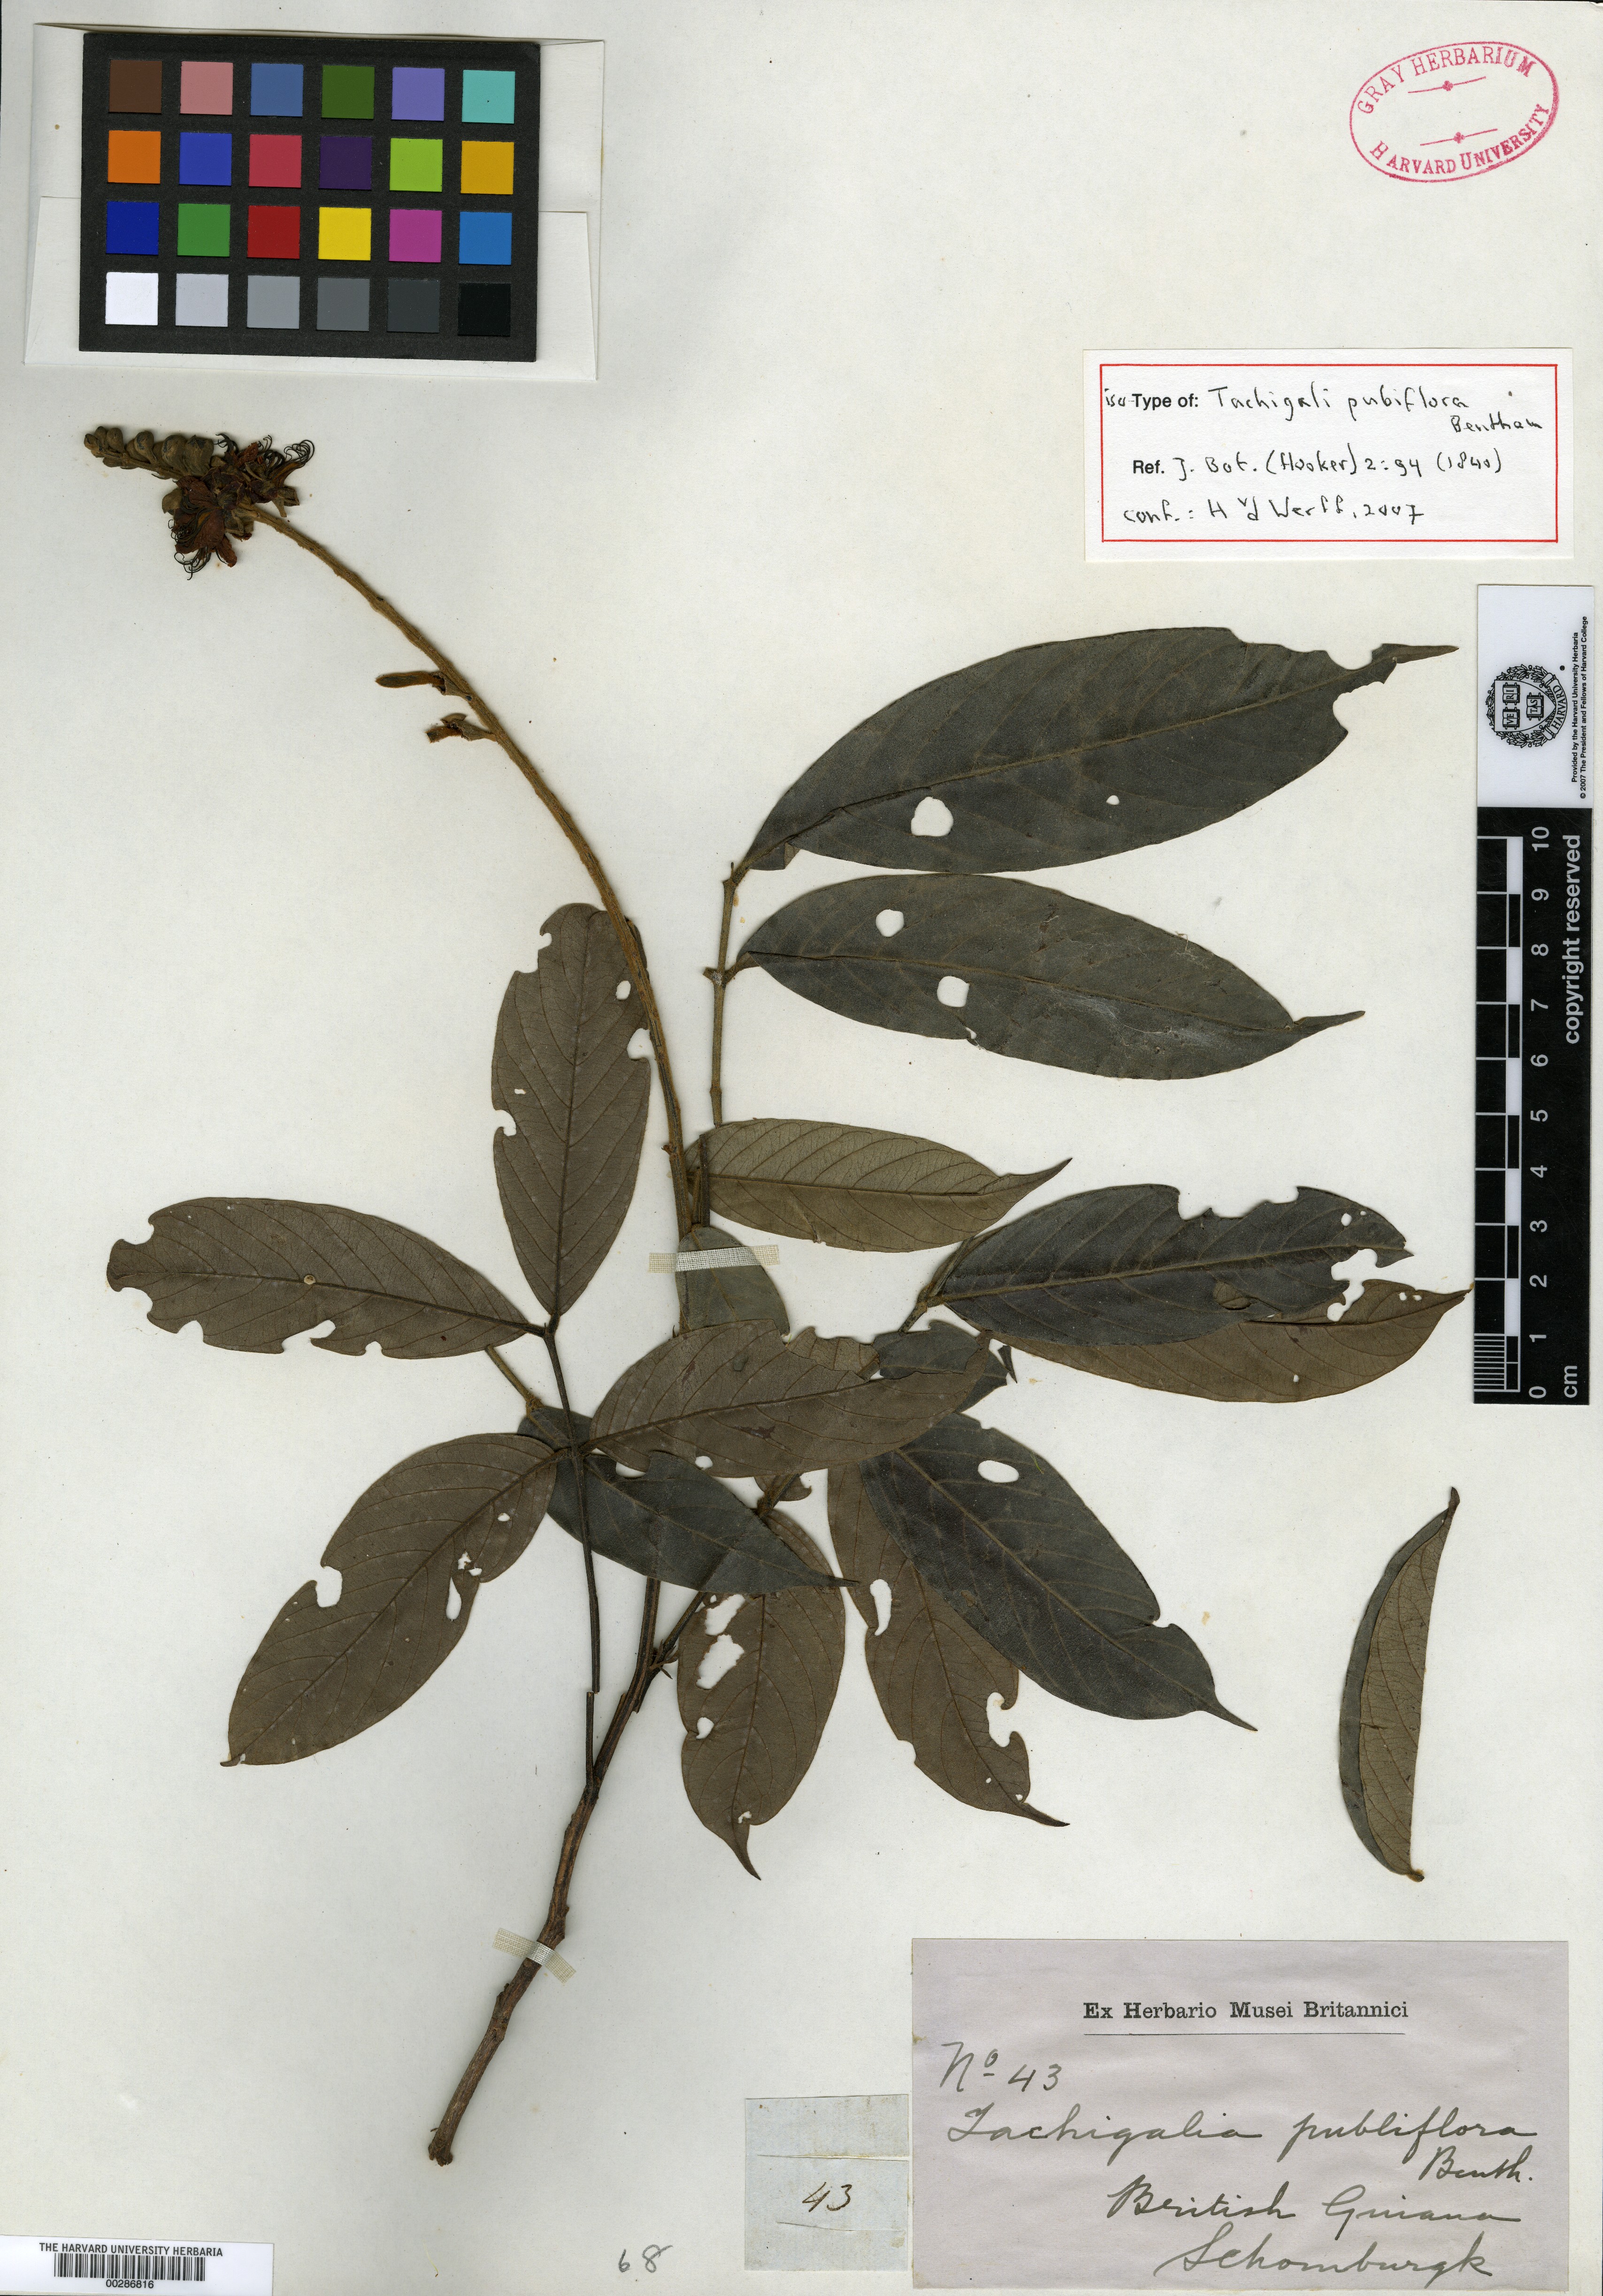 Tachigali pubiflora image